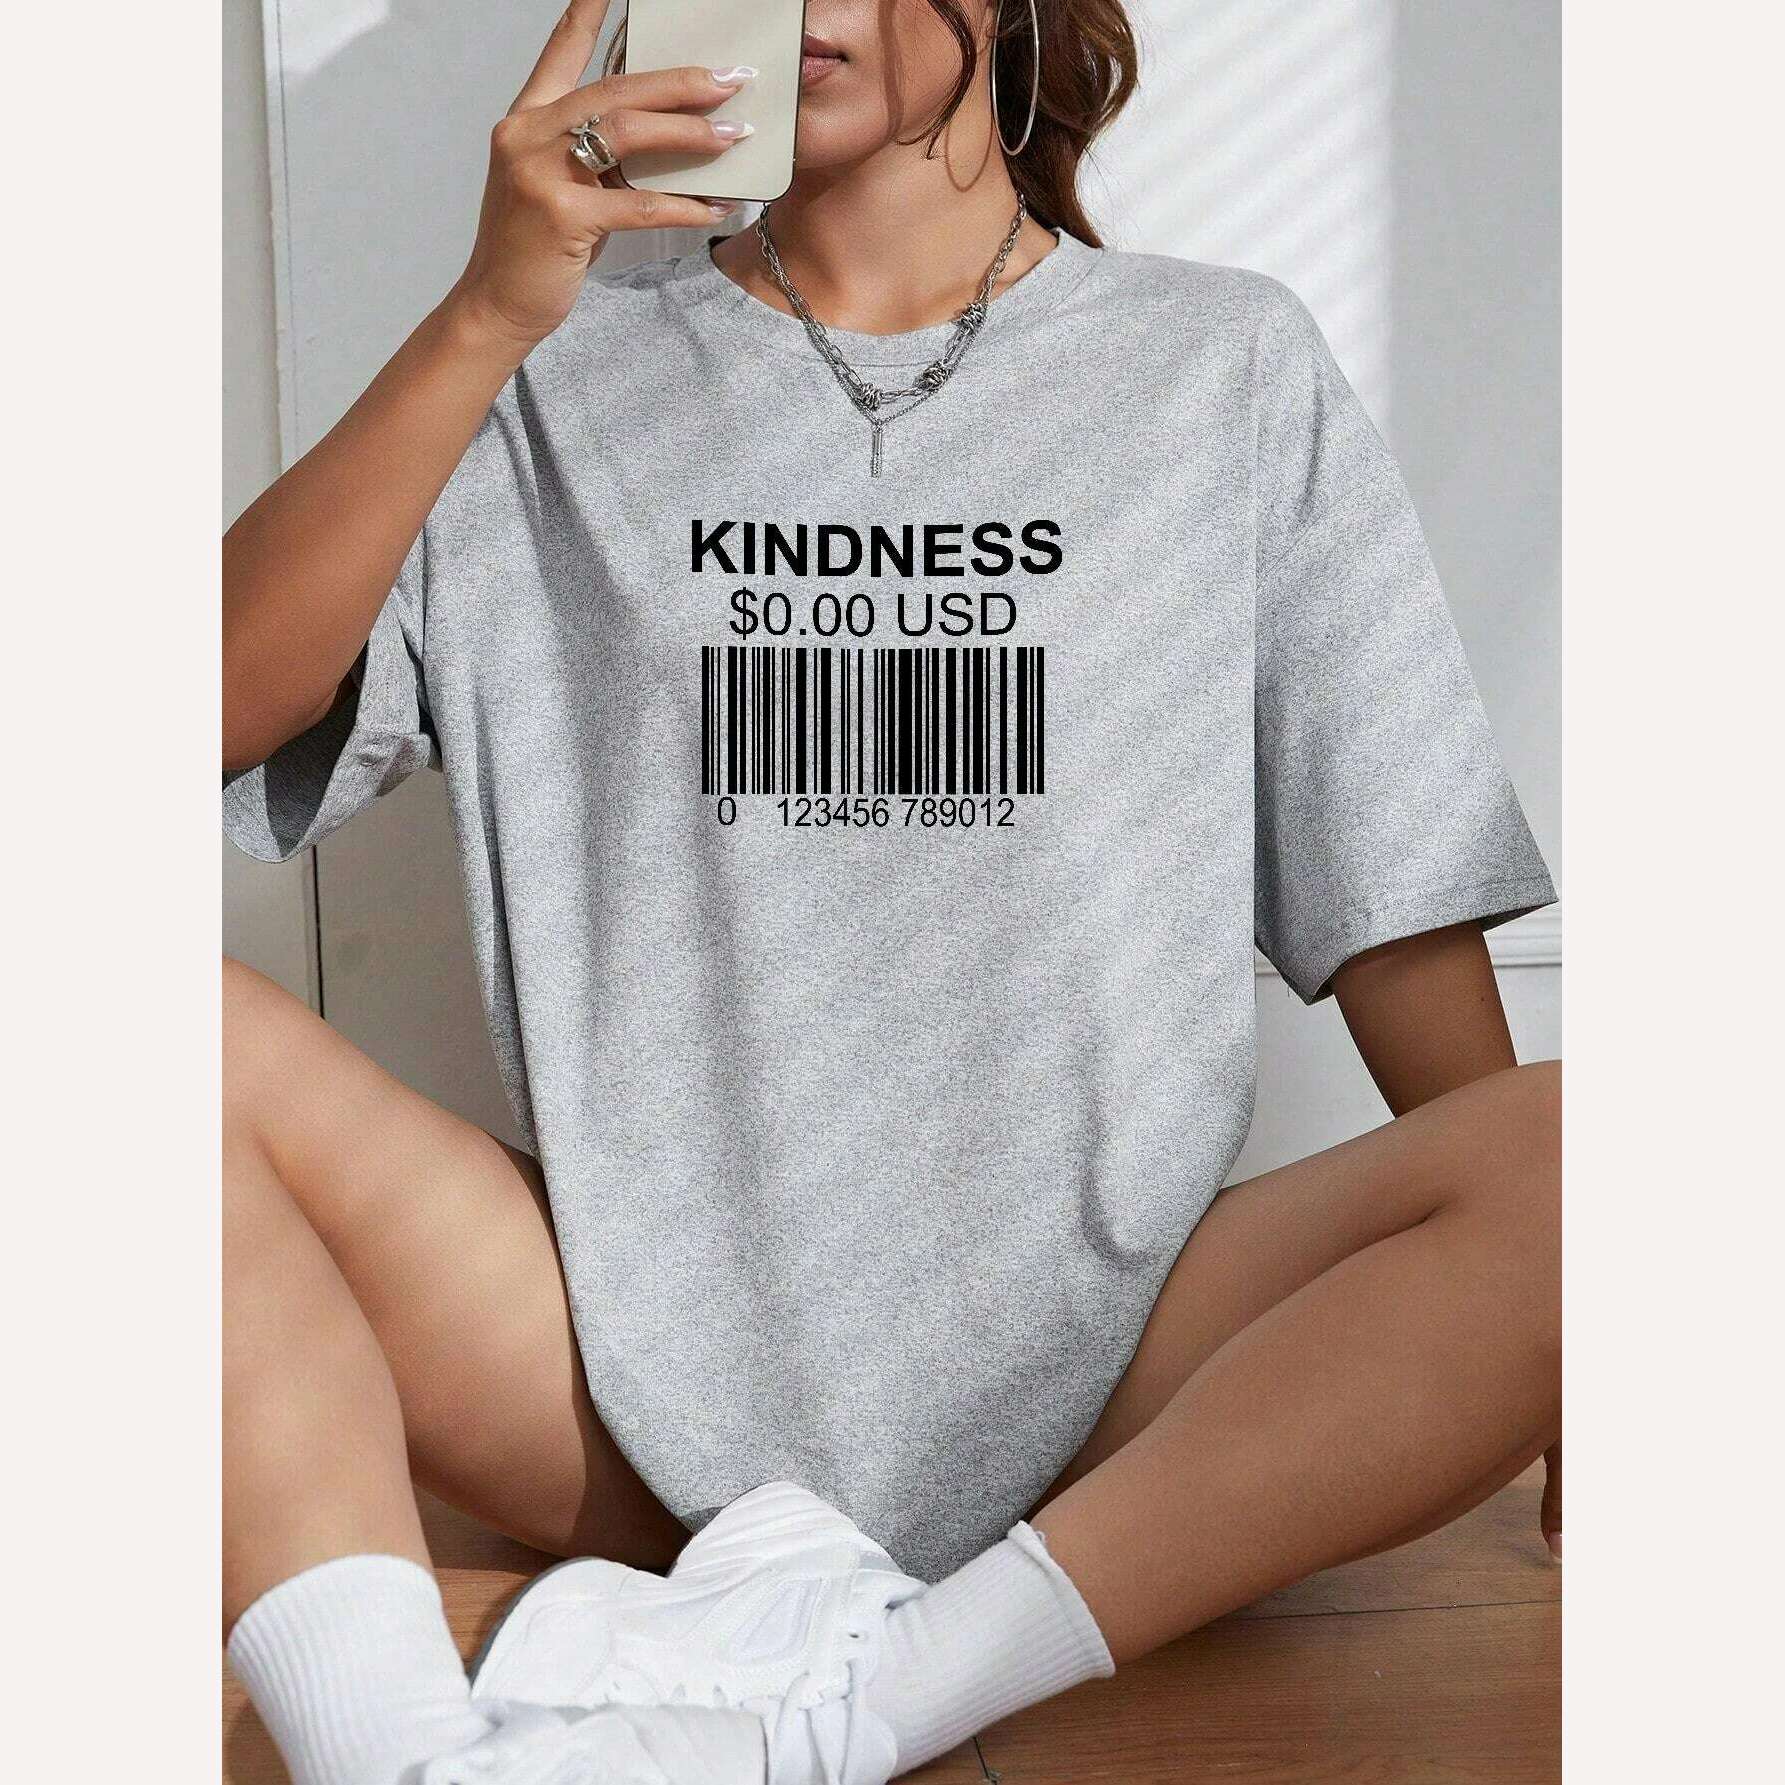 KIMLUD, Kindness Creative Bar Code Creativity Womens Short Sleeve Funny Casual Oversize Tops All-math Trend T-Shirts Woman Tee Clothing, KIMLUD Womens Clothes